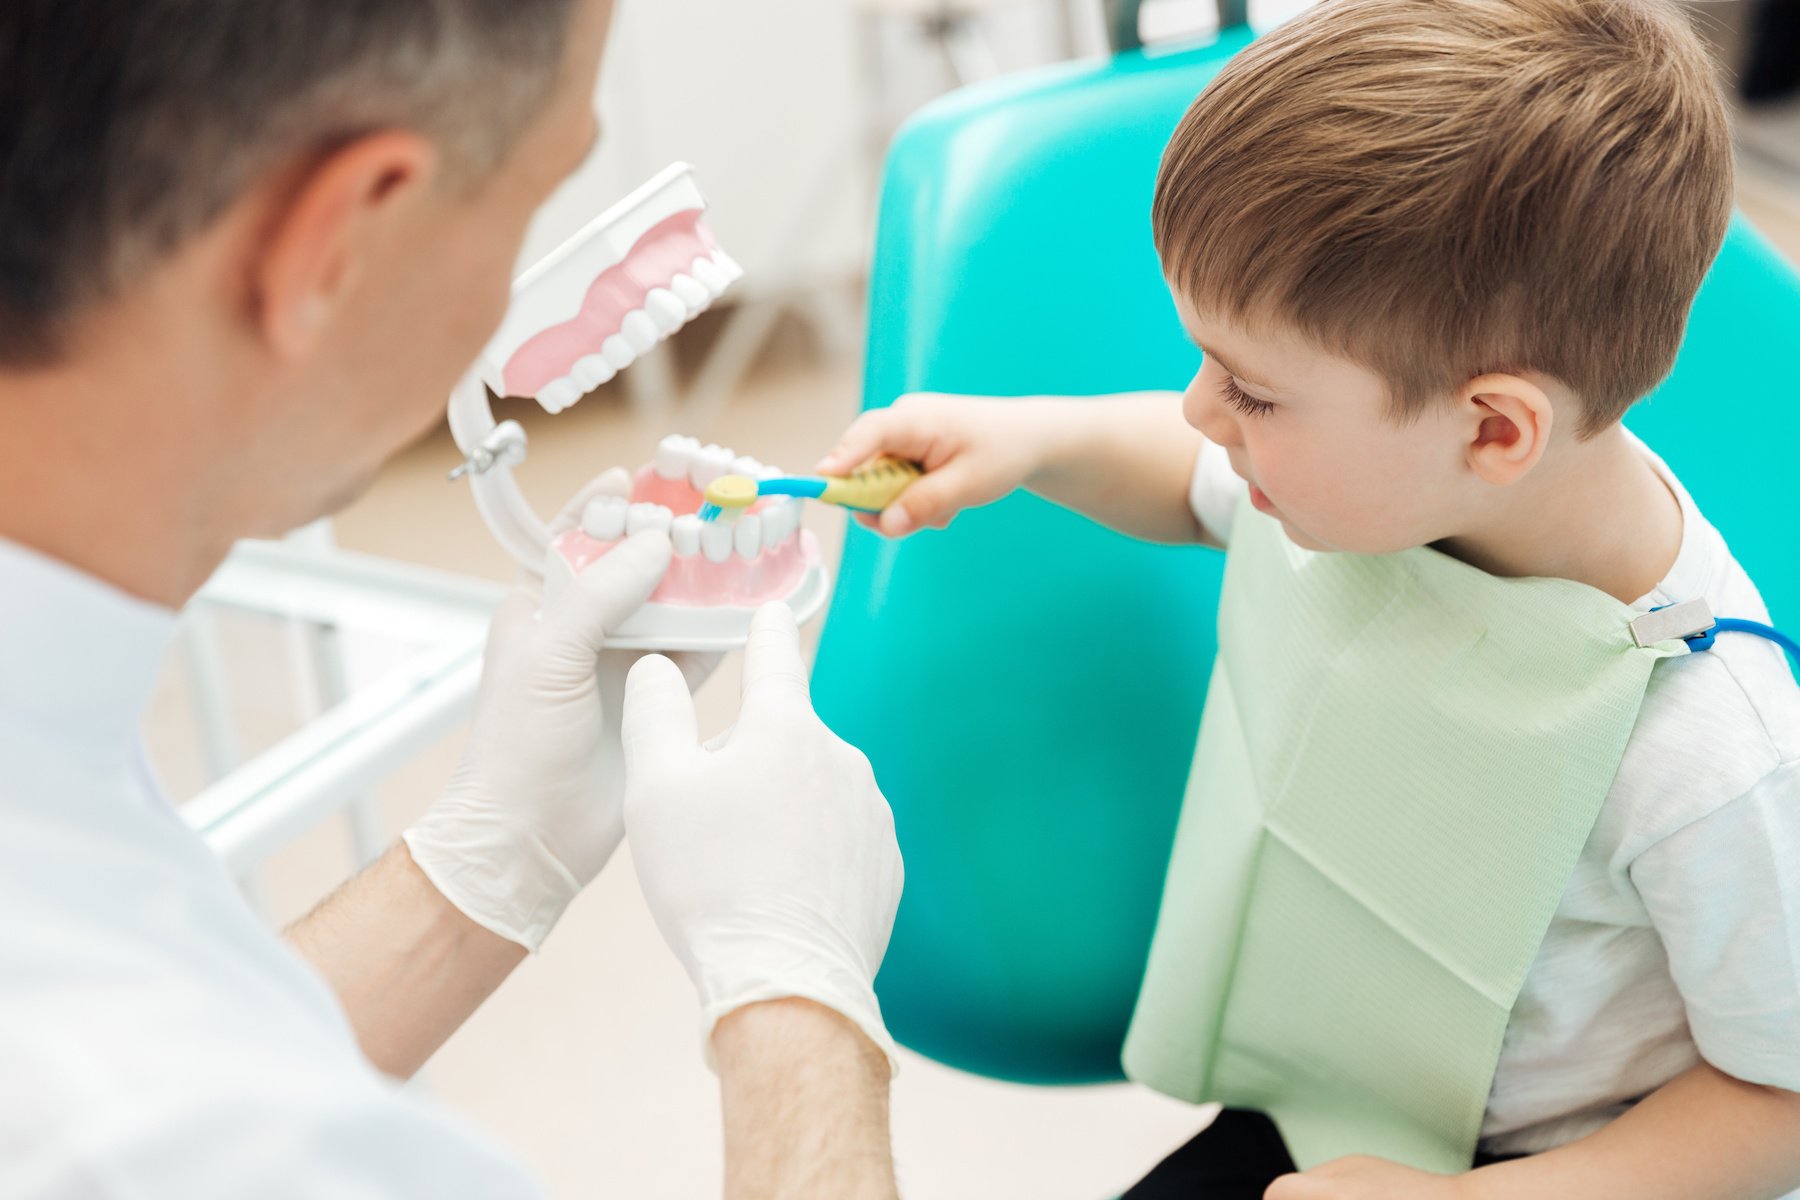 pediatric dentistry kids dentist family dentistry oral health care Dr sandy crocker peter mitchell kelowna